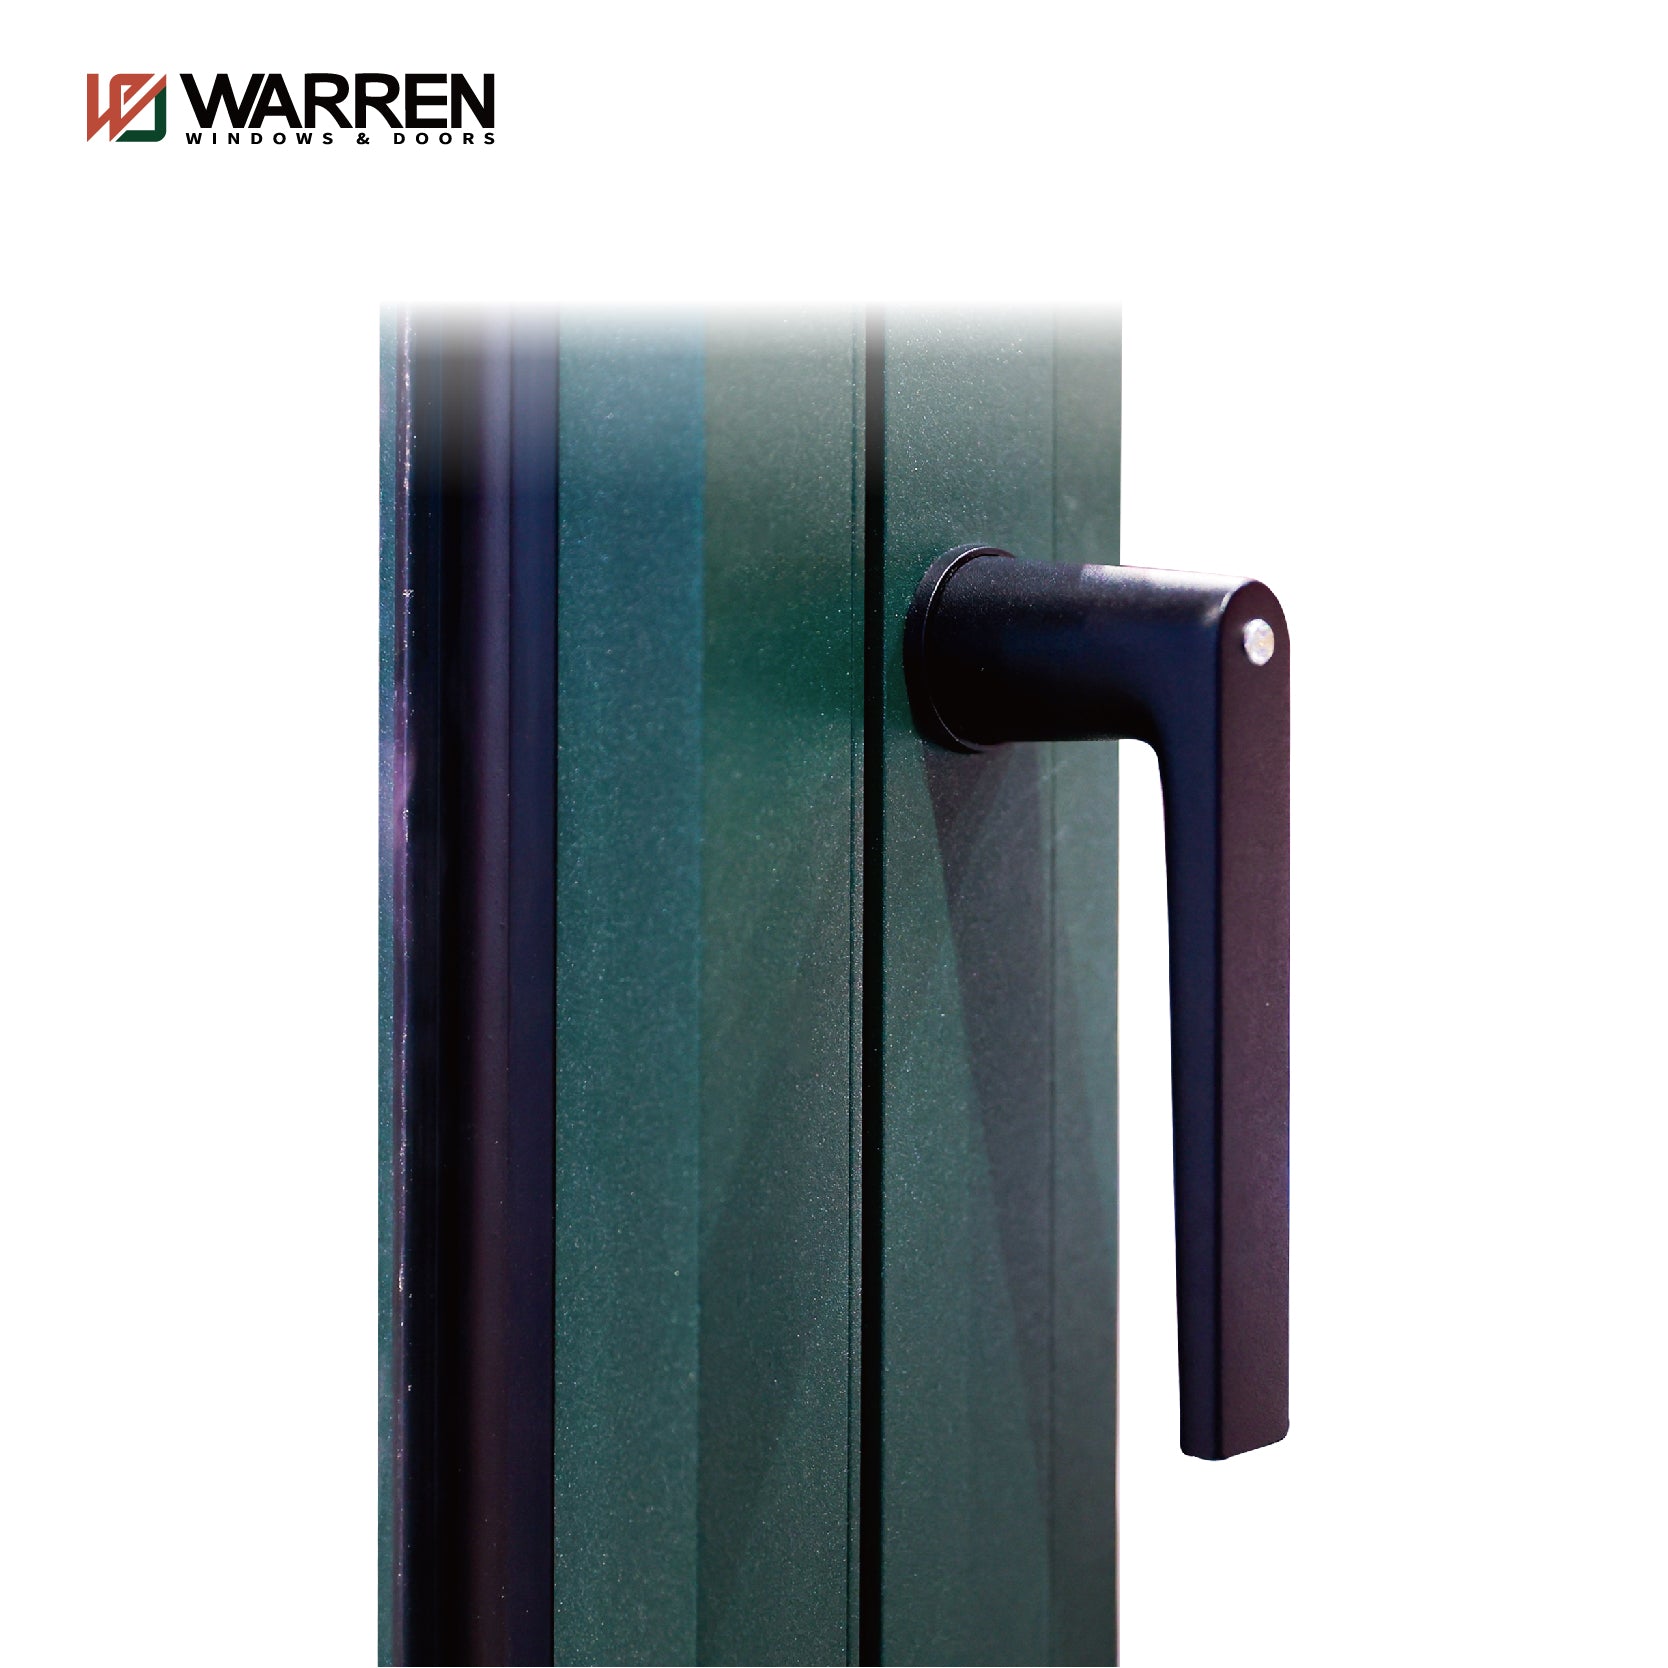 Warren 7 foot window aluminum frame glass large casement sliding window soundproof top sale latest window designs